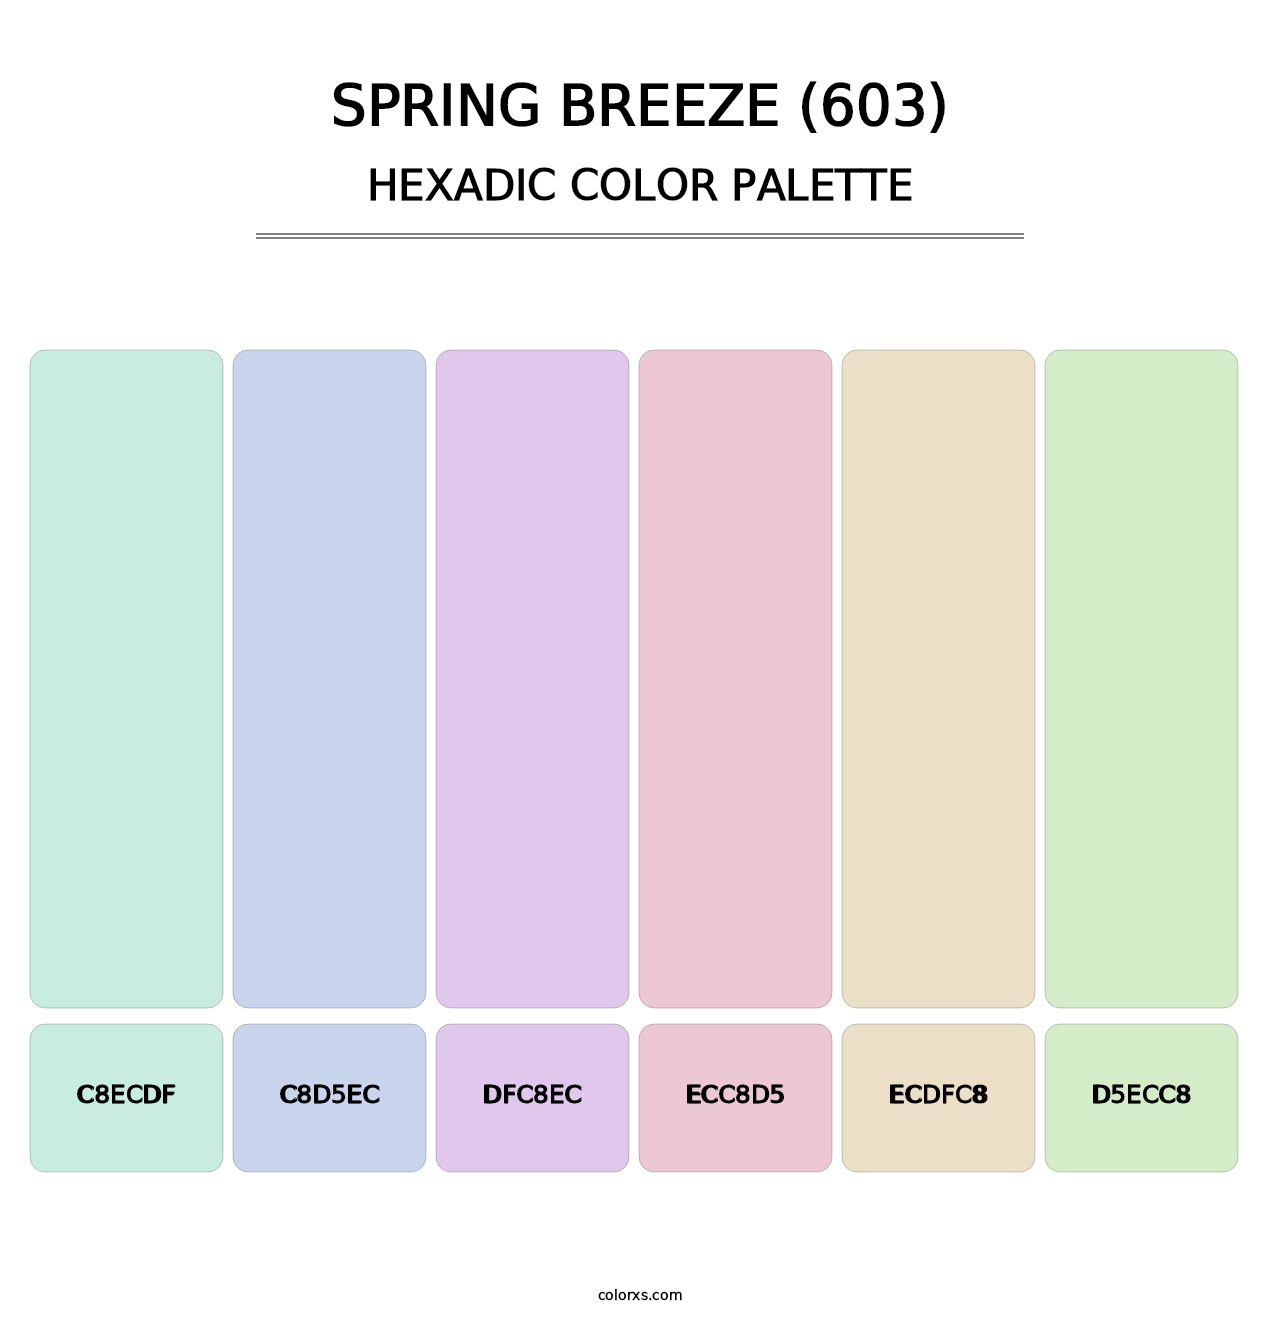 Spring Breeze (603) - Hexadic Color Palette